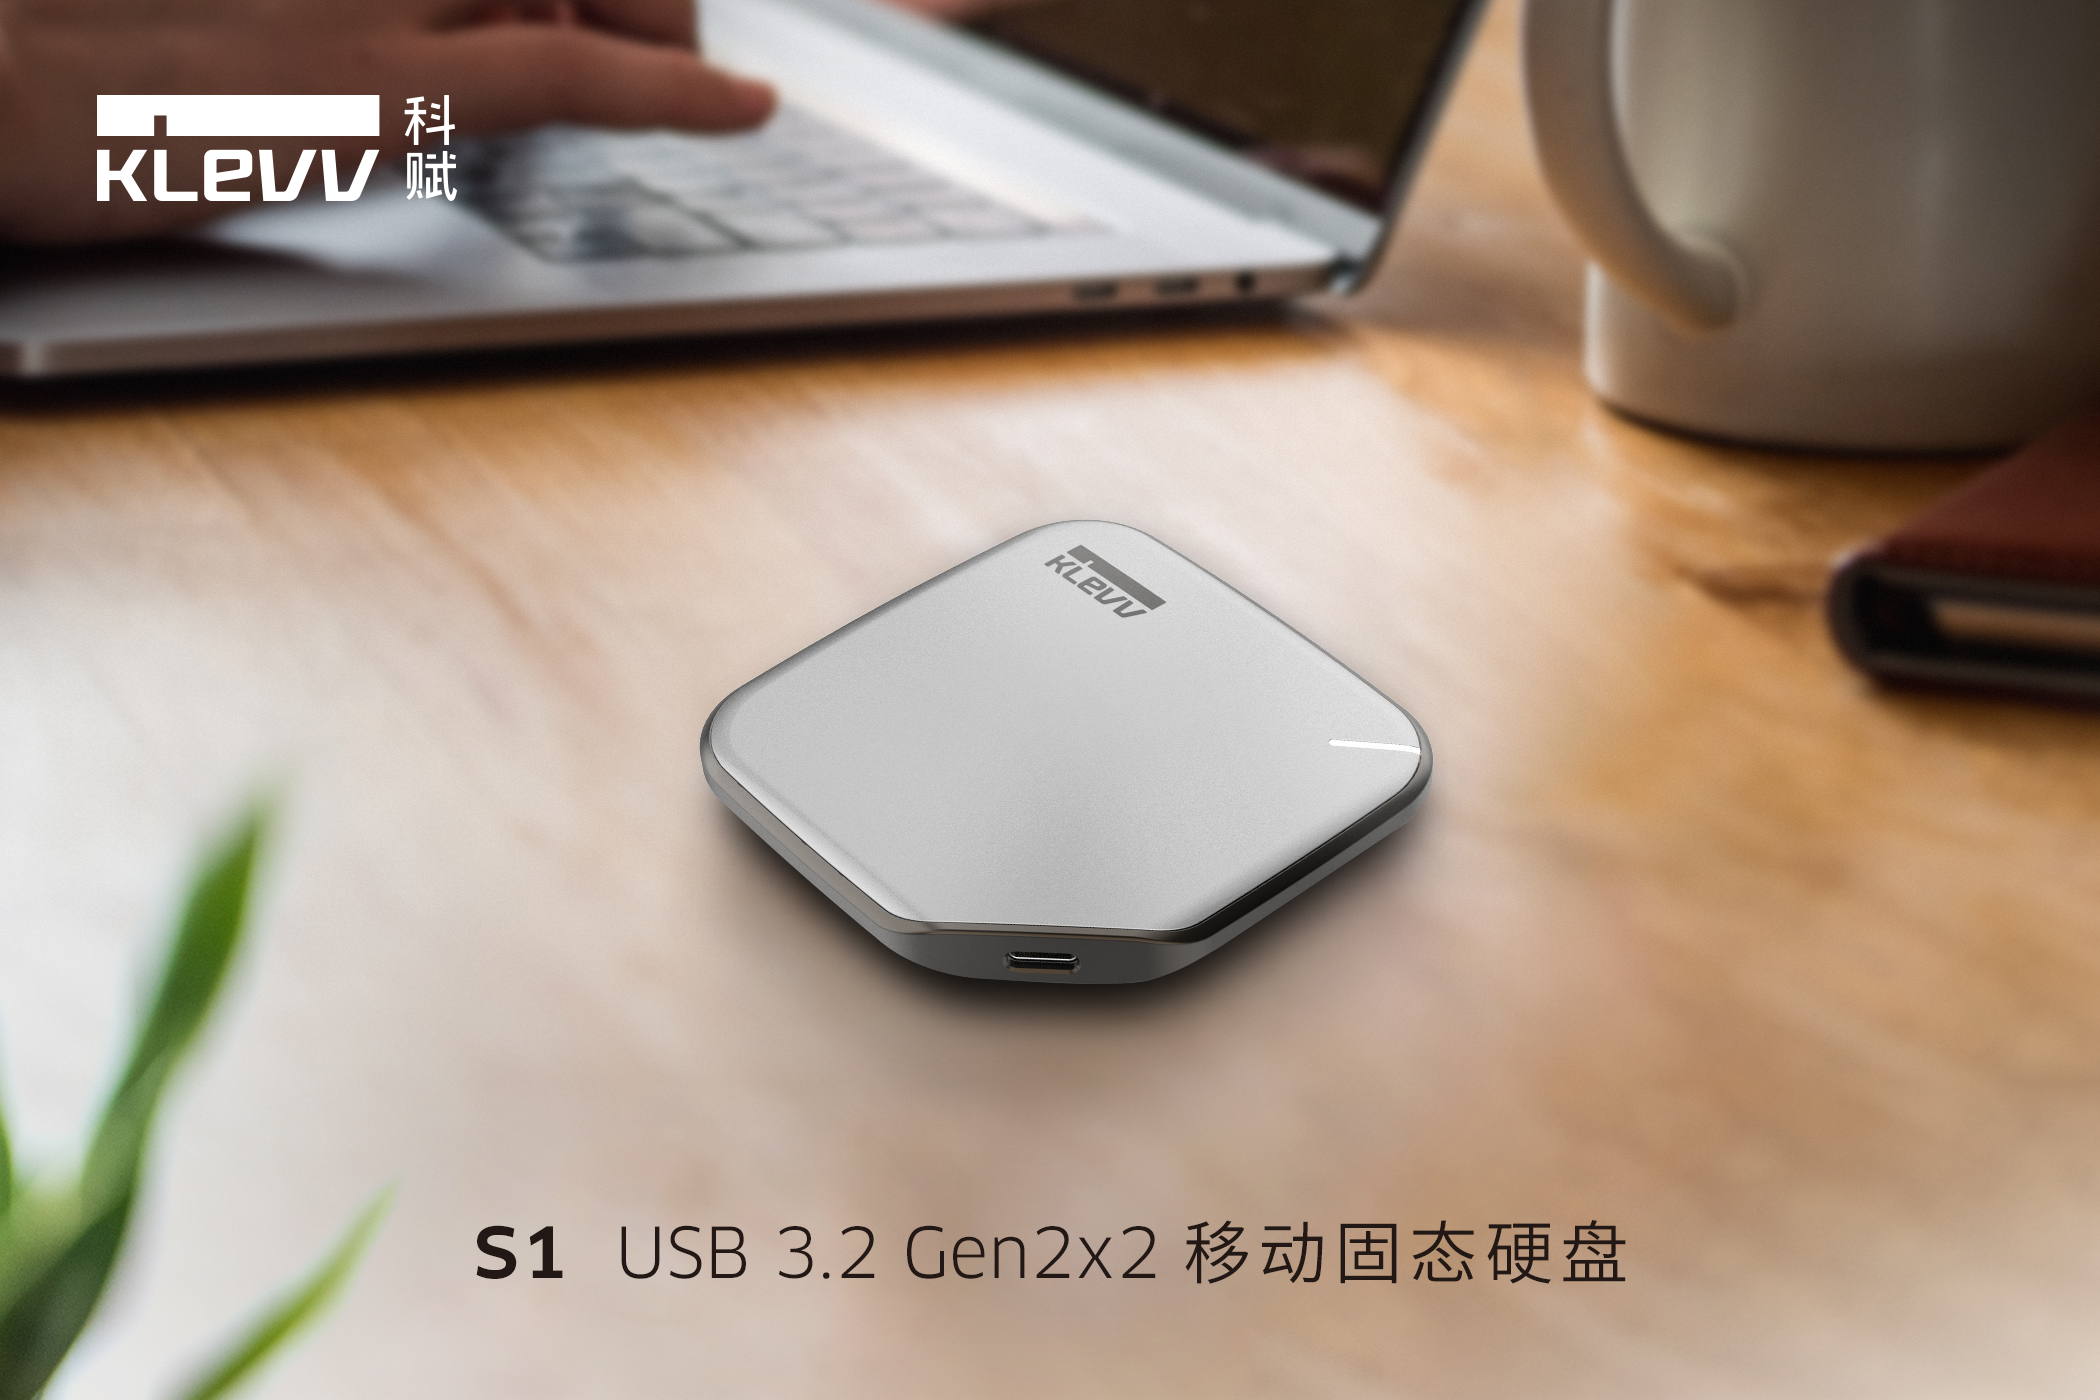 KLEVV科賦發表全新 S1 USB 3.2 Gen2x2 可攜式固態硬碟